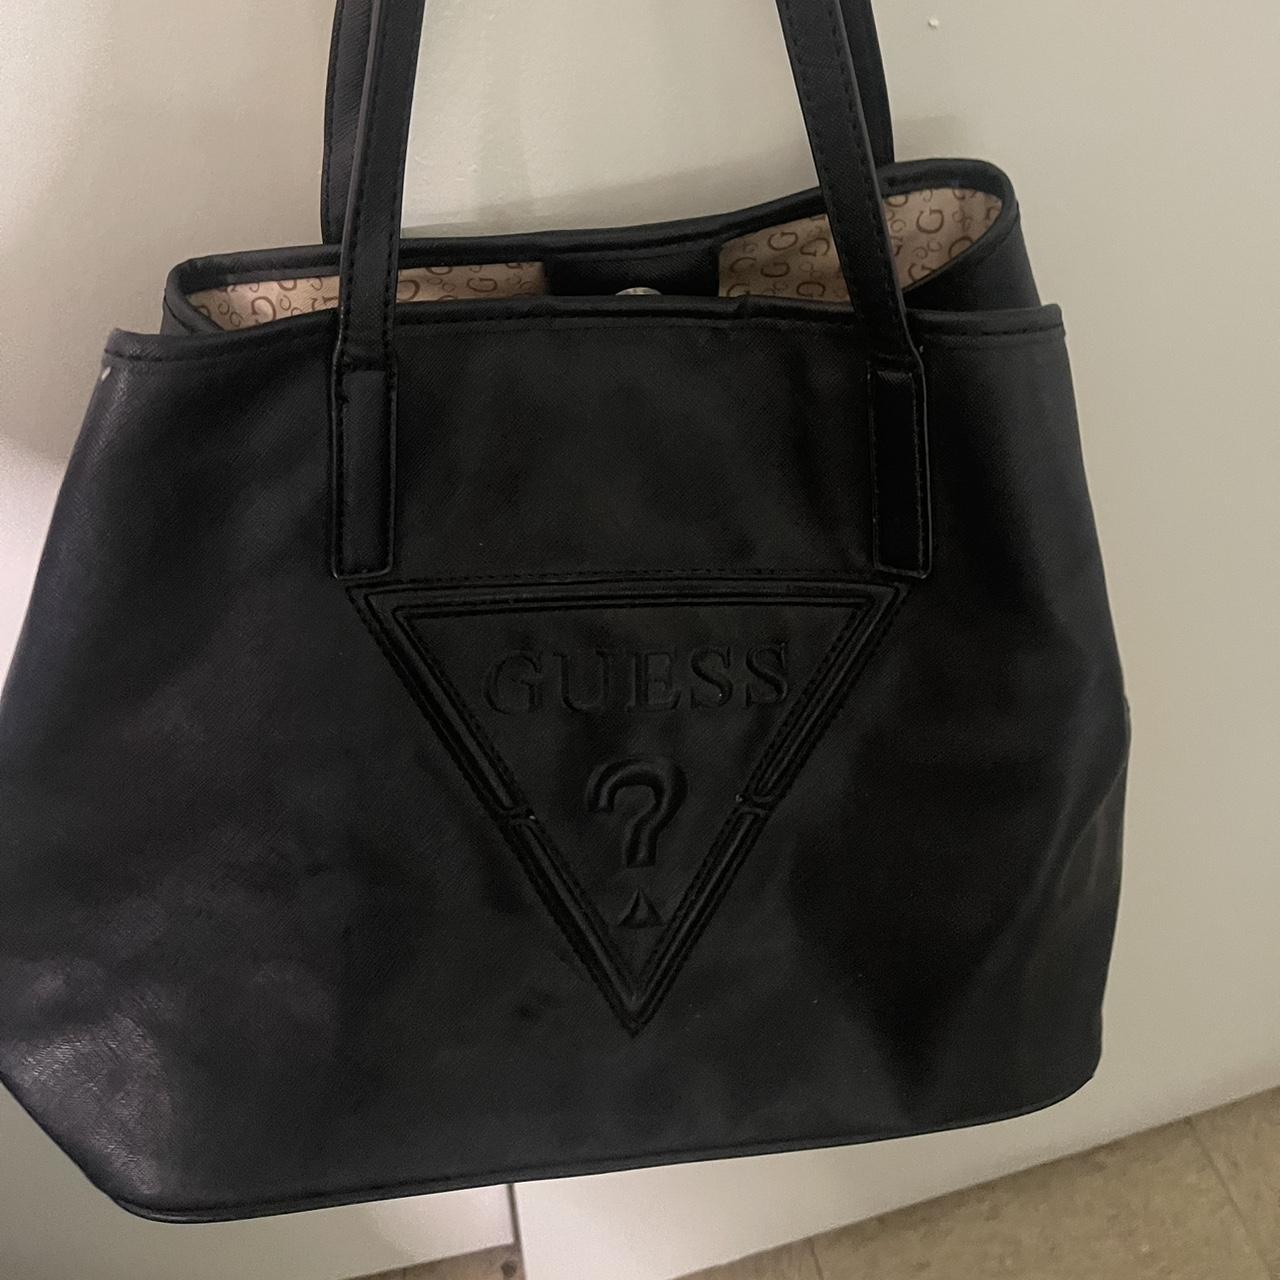 GUESS Matte Black Leather Quilted Look Crossbody Shoulder Handbag Purse |  eBay